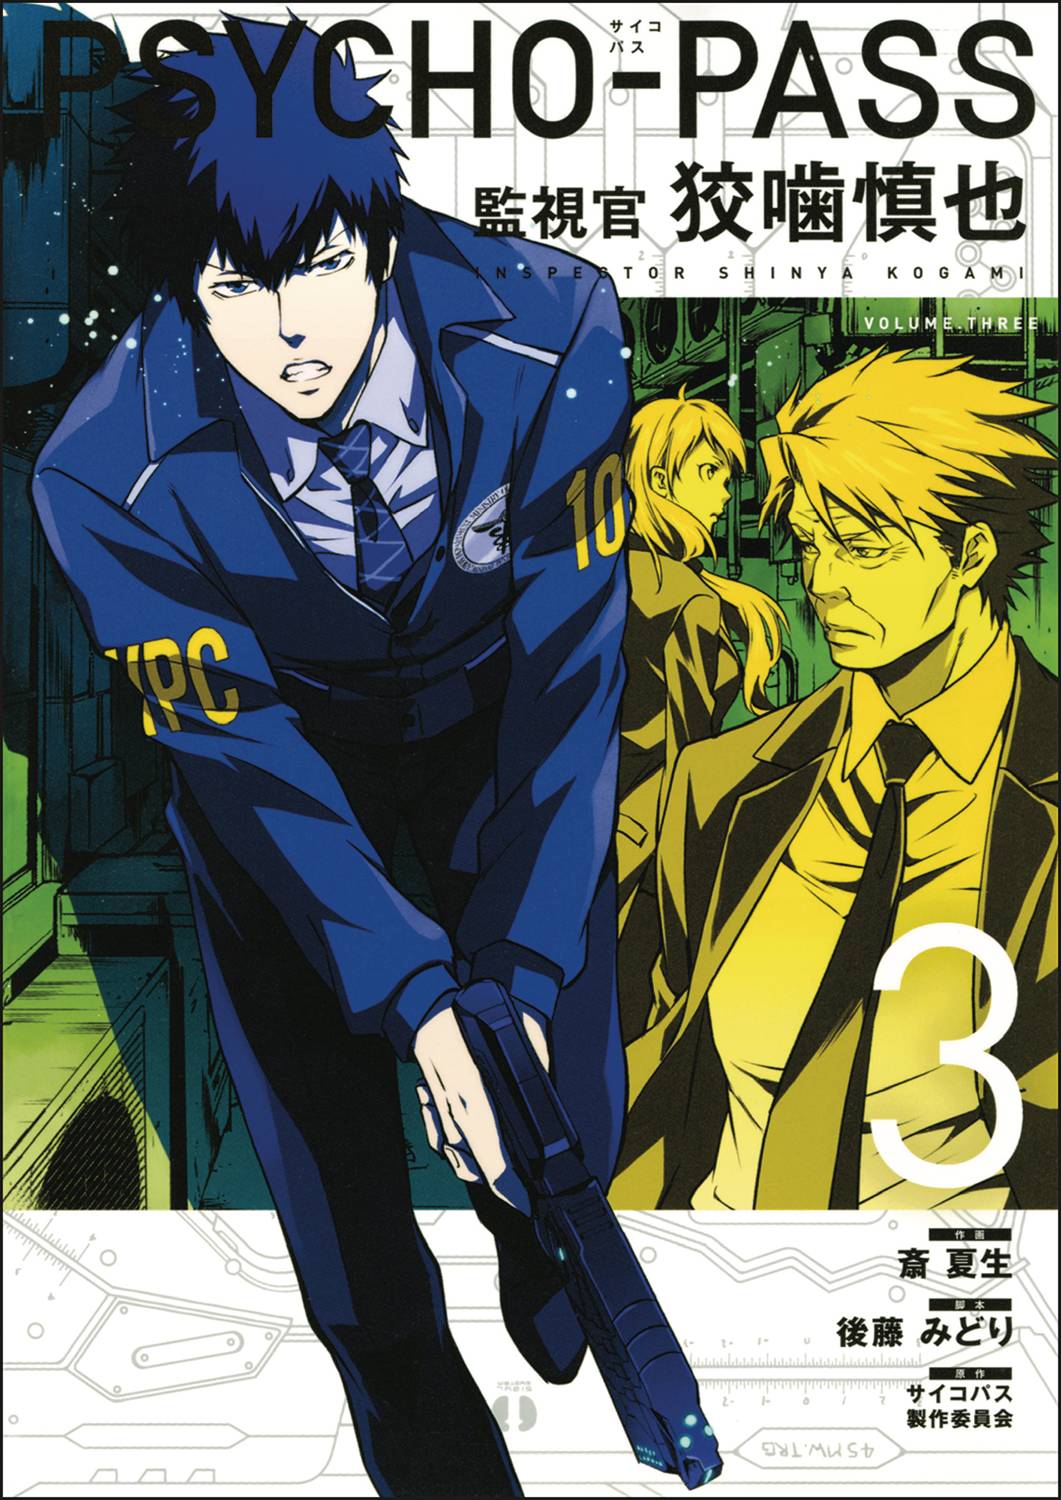 Psycho Pass Inspector Shinya Kogami Graphic Novel Volume 3